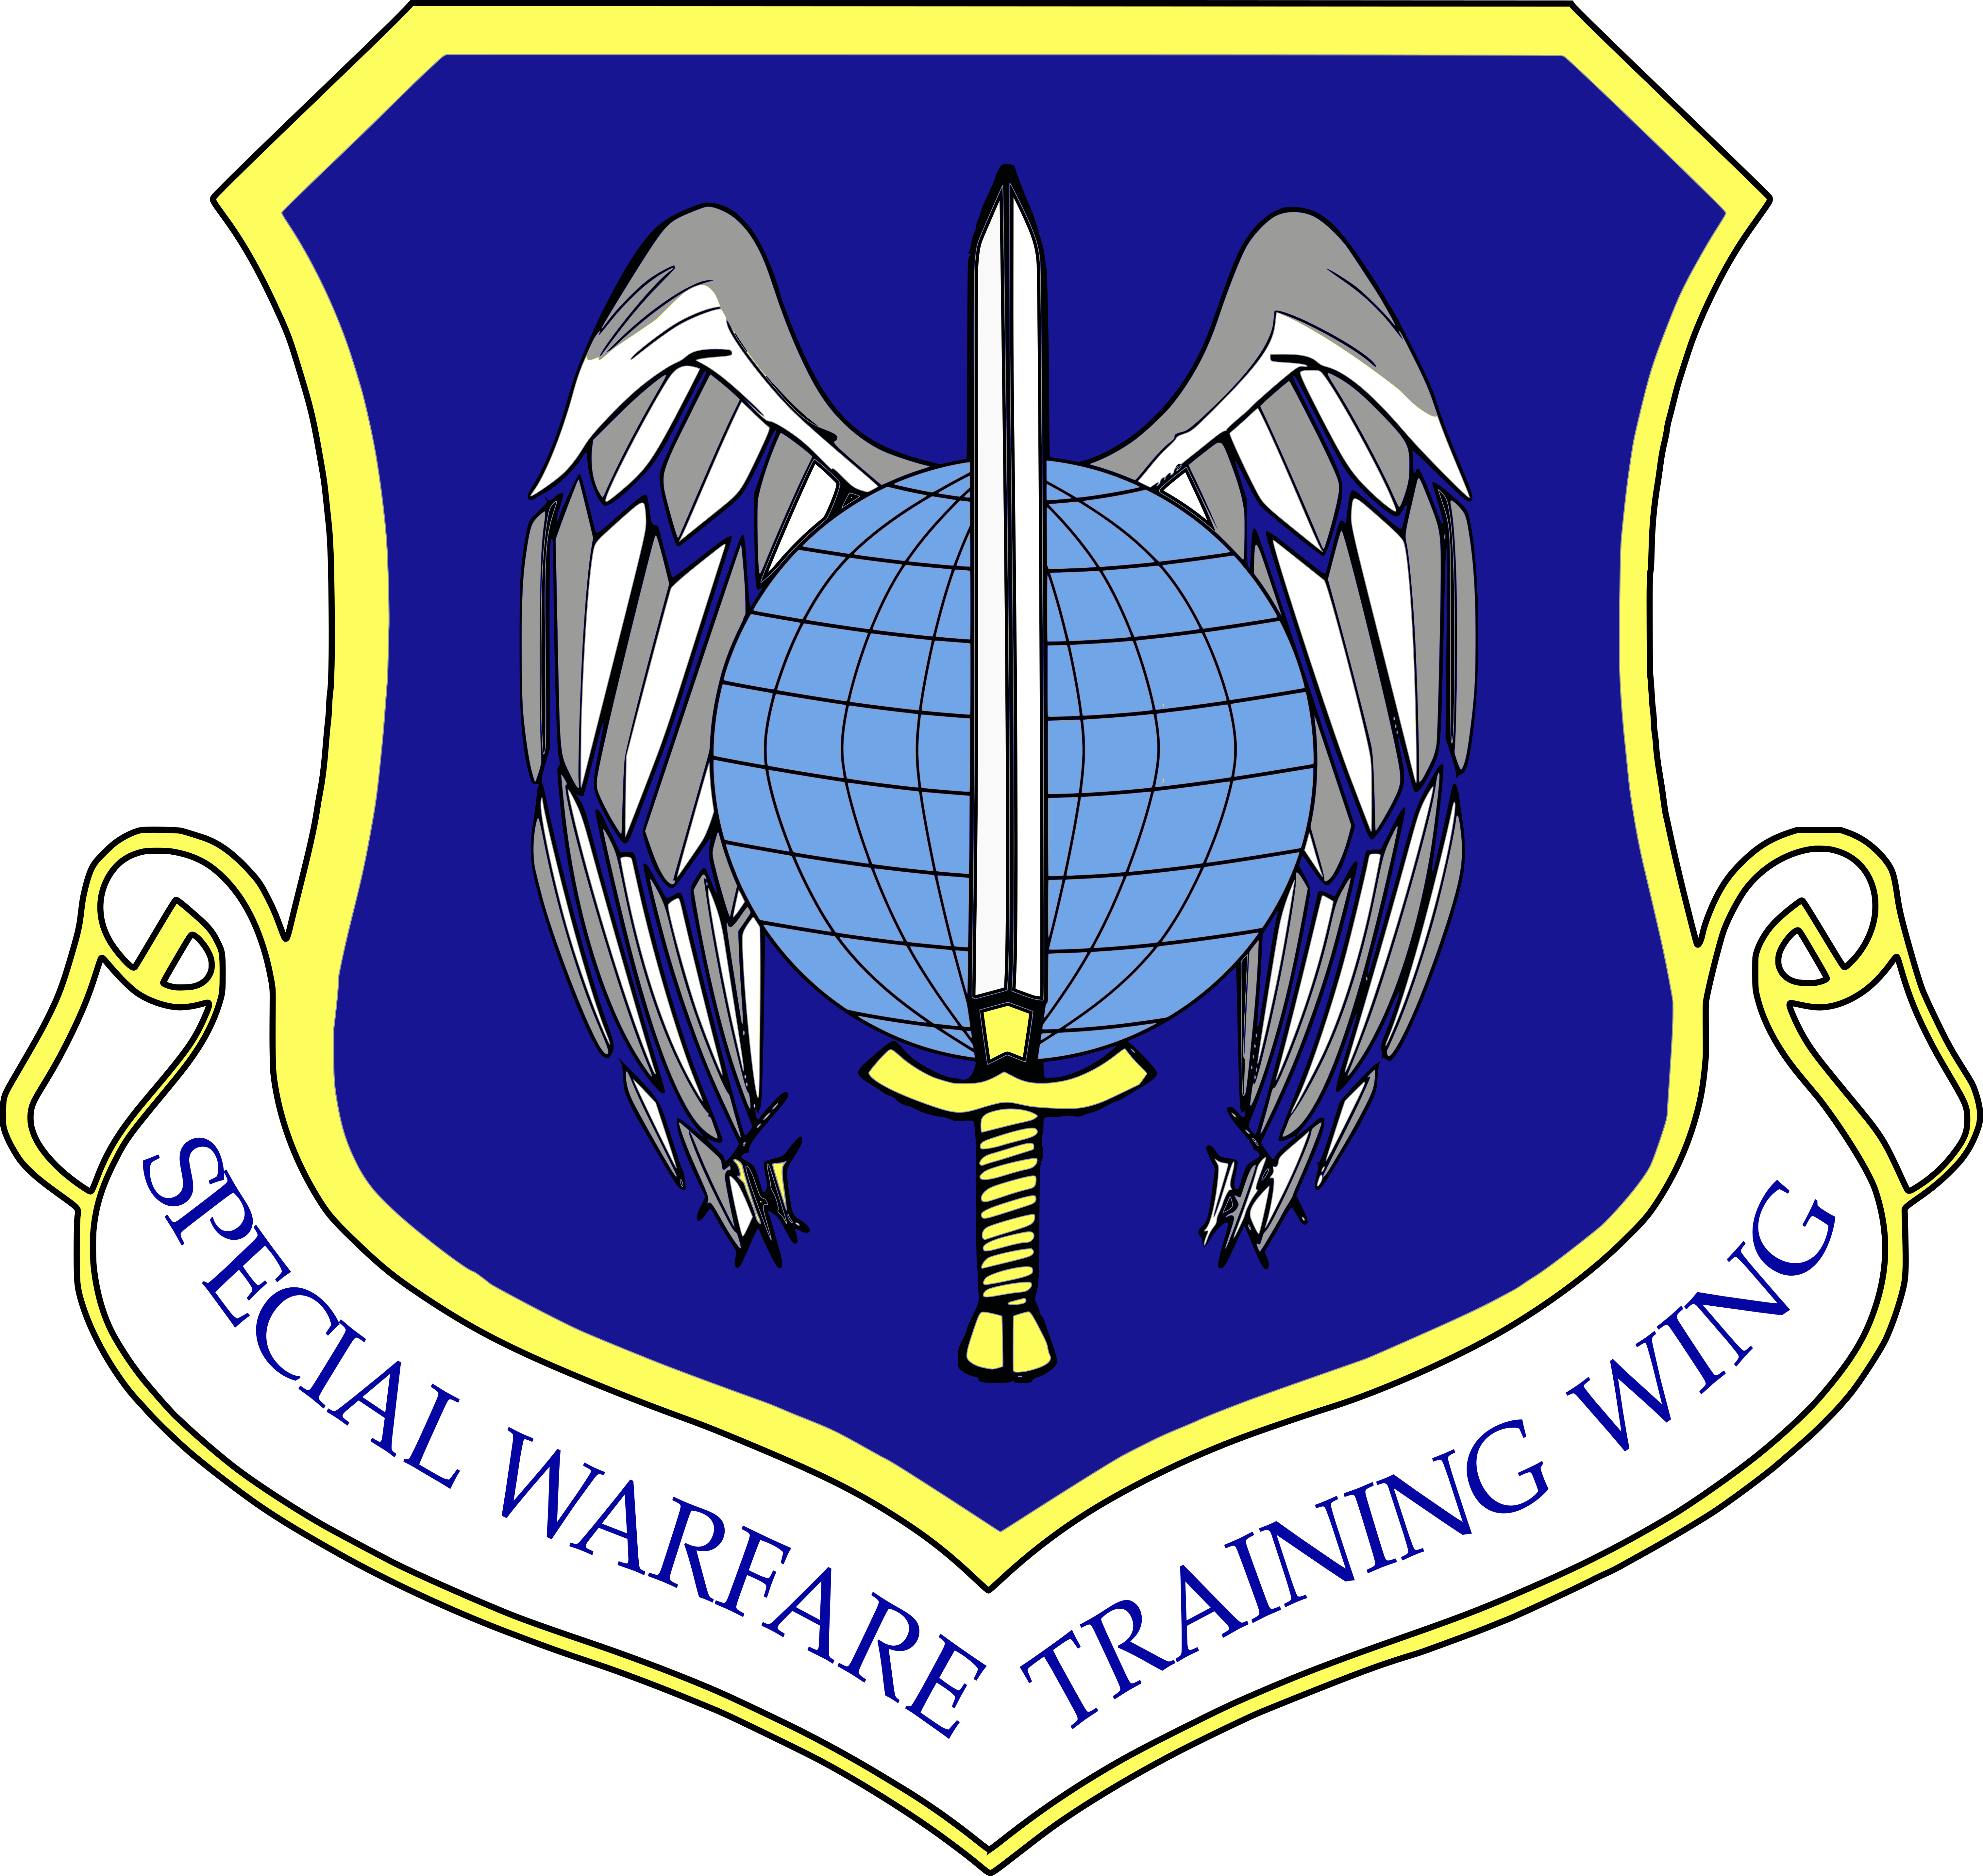 Special Warfare Training Wing shield